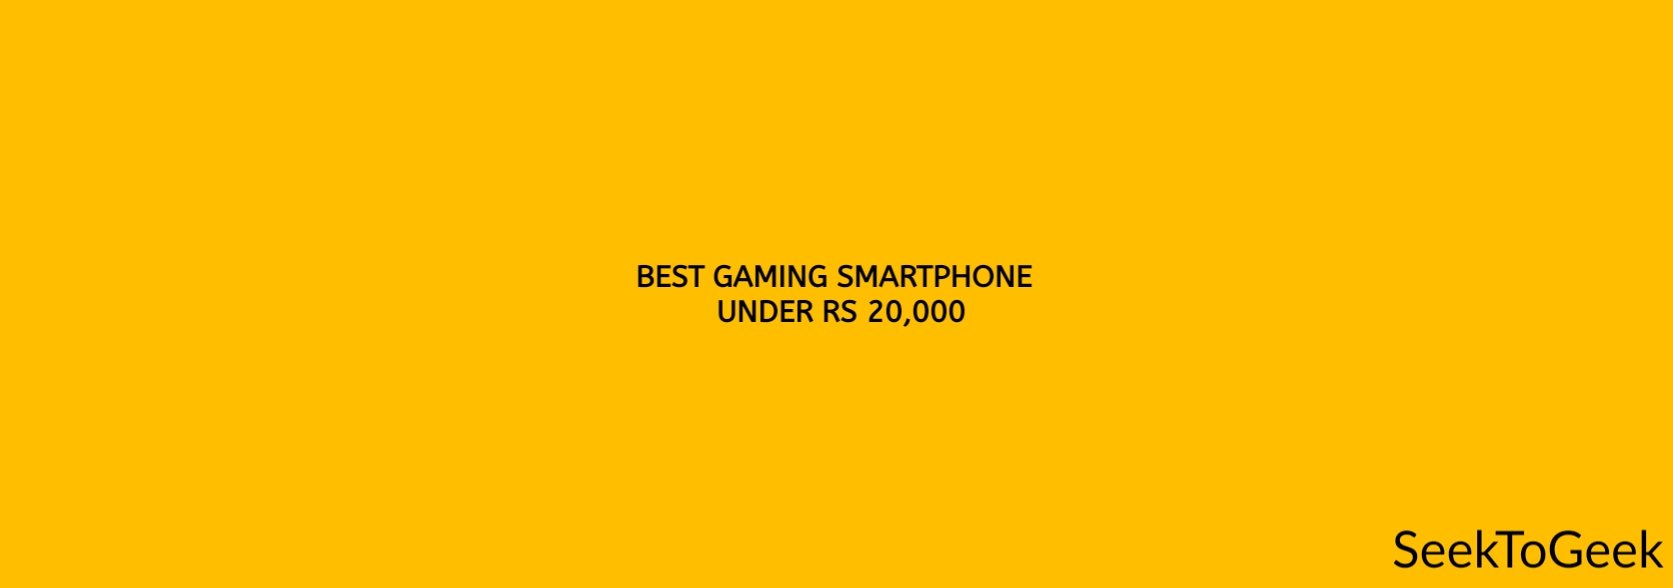 best gaming smartphones india